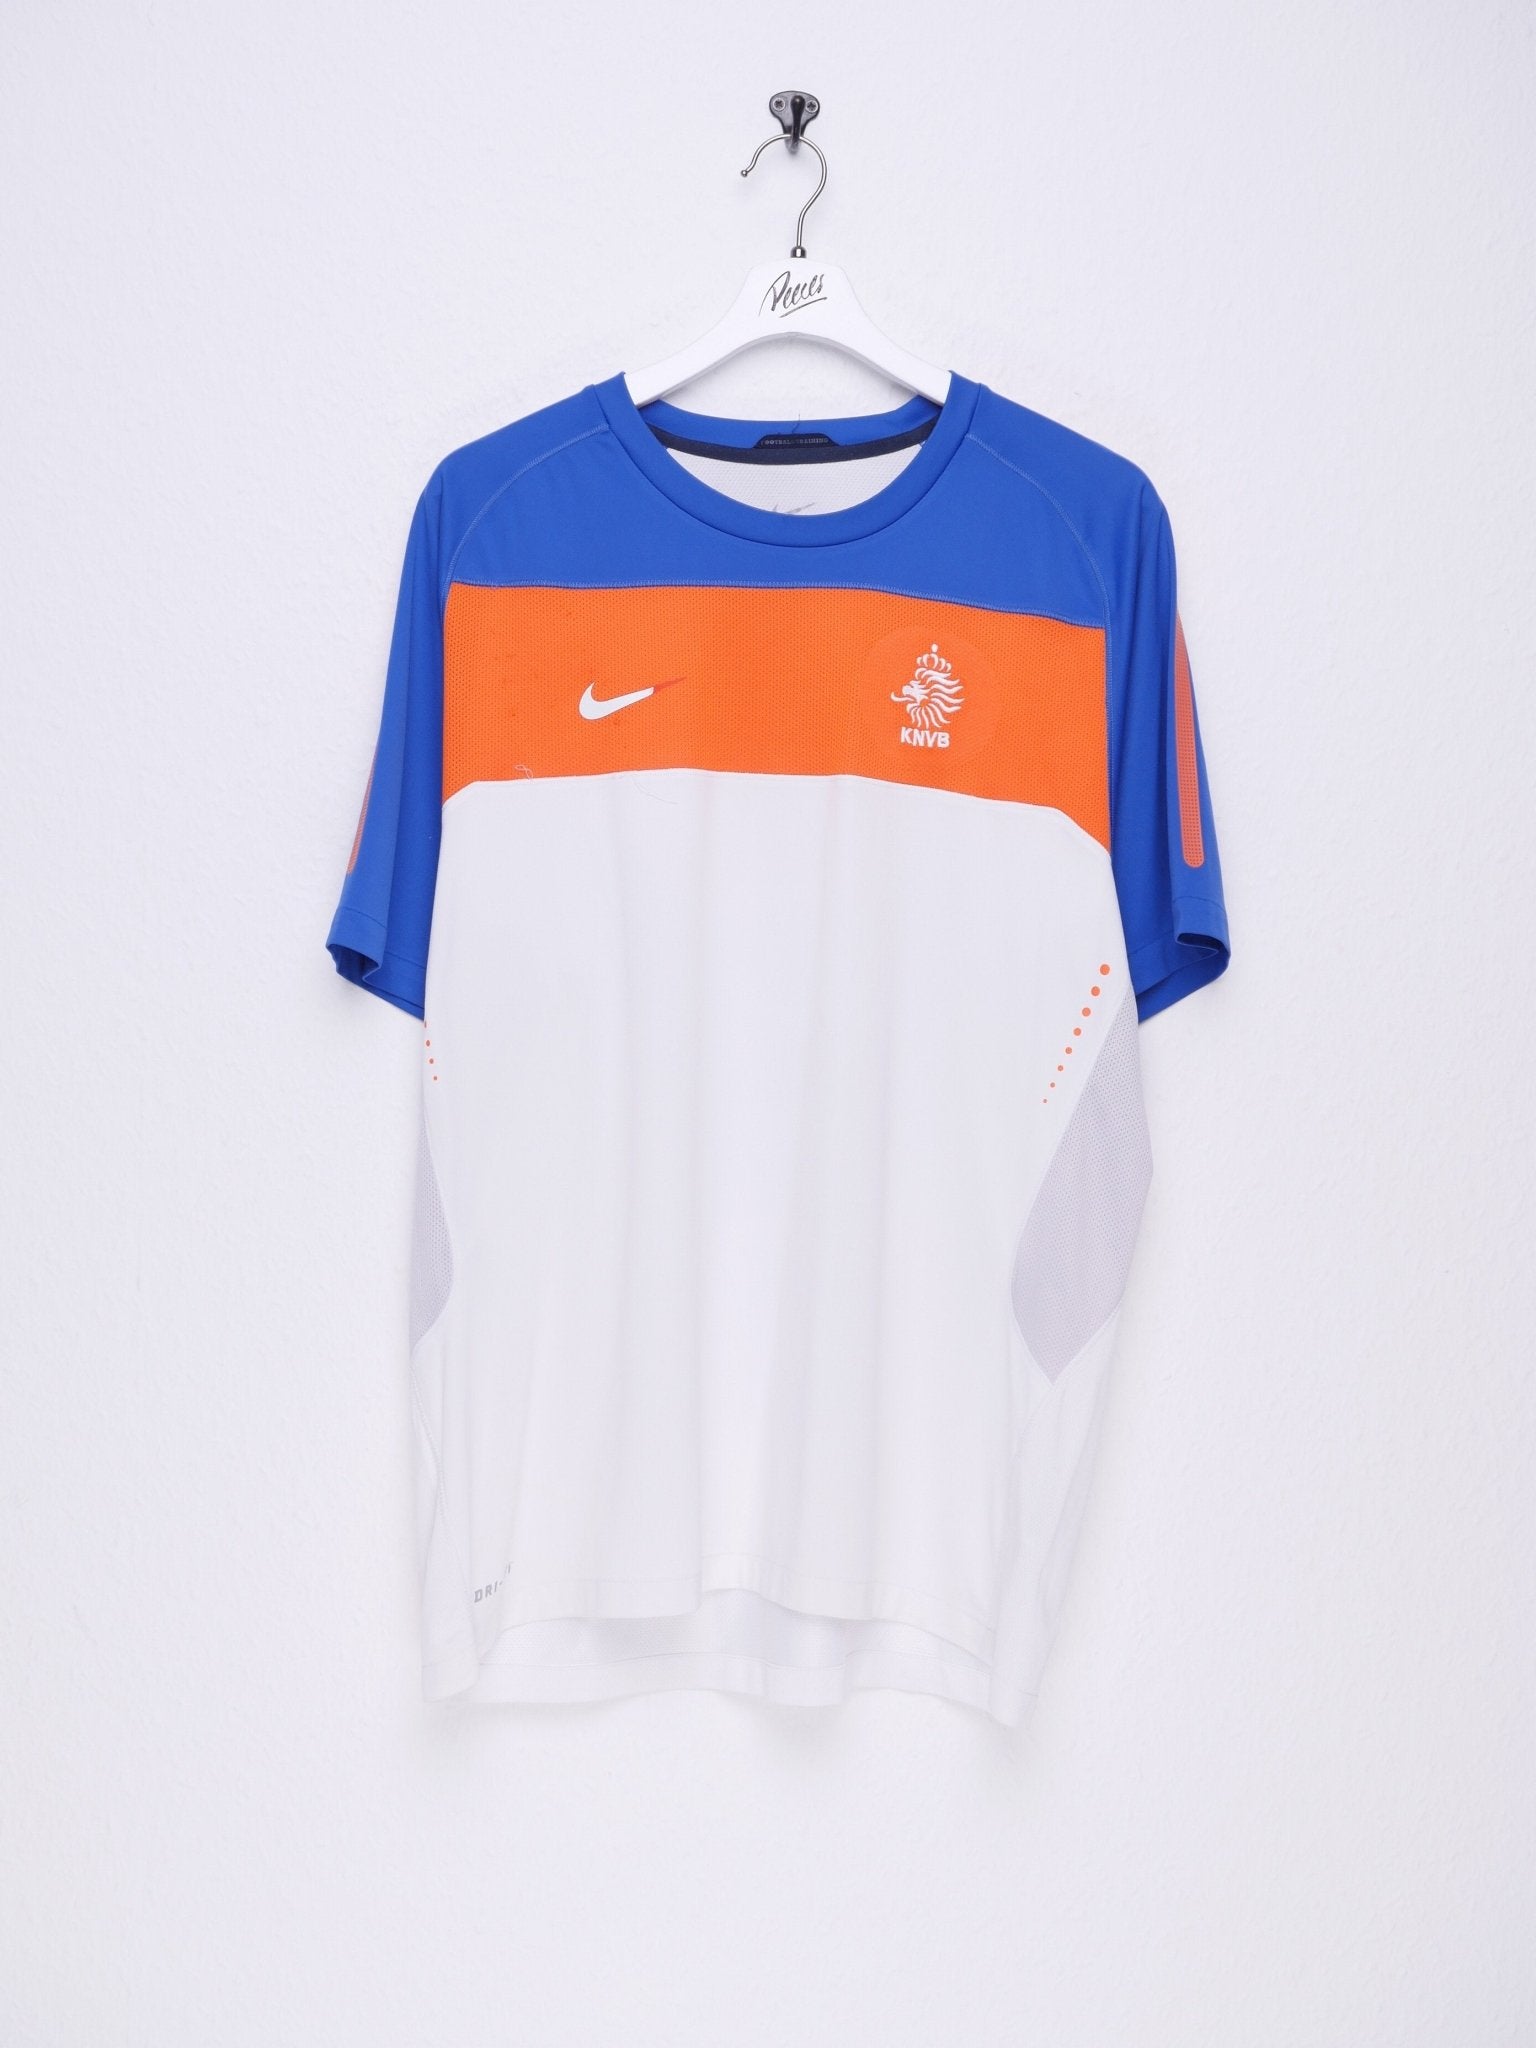 nike printed Swoosh 'KNVB' three toned Jersey Shirt - Peeces